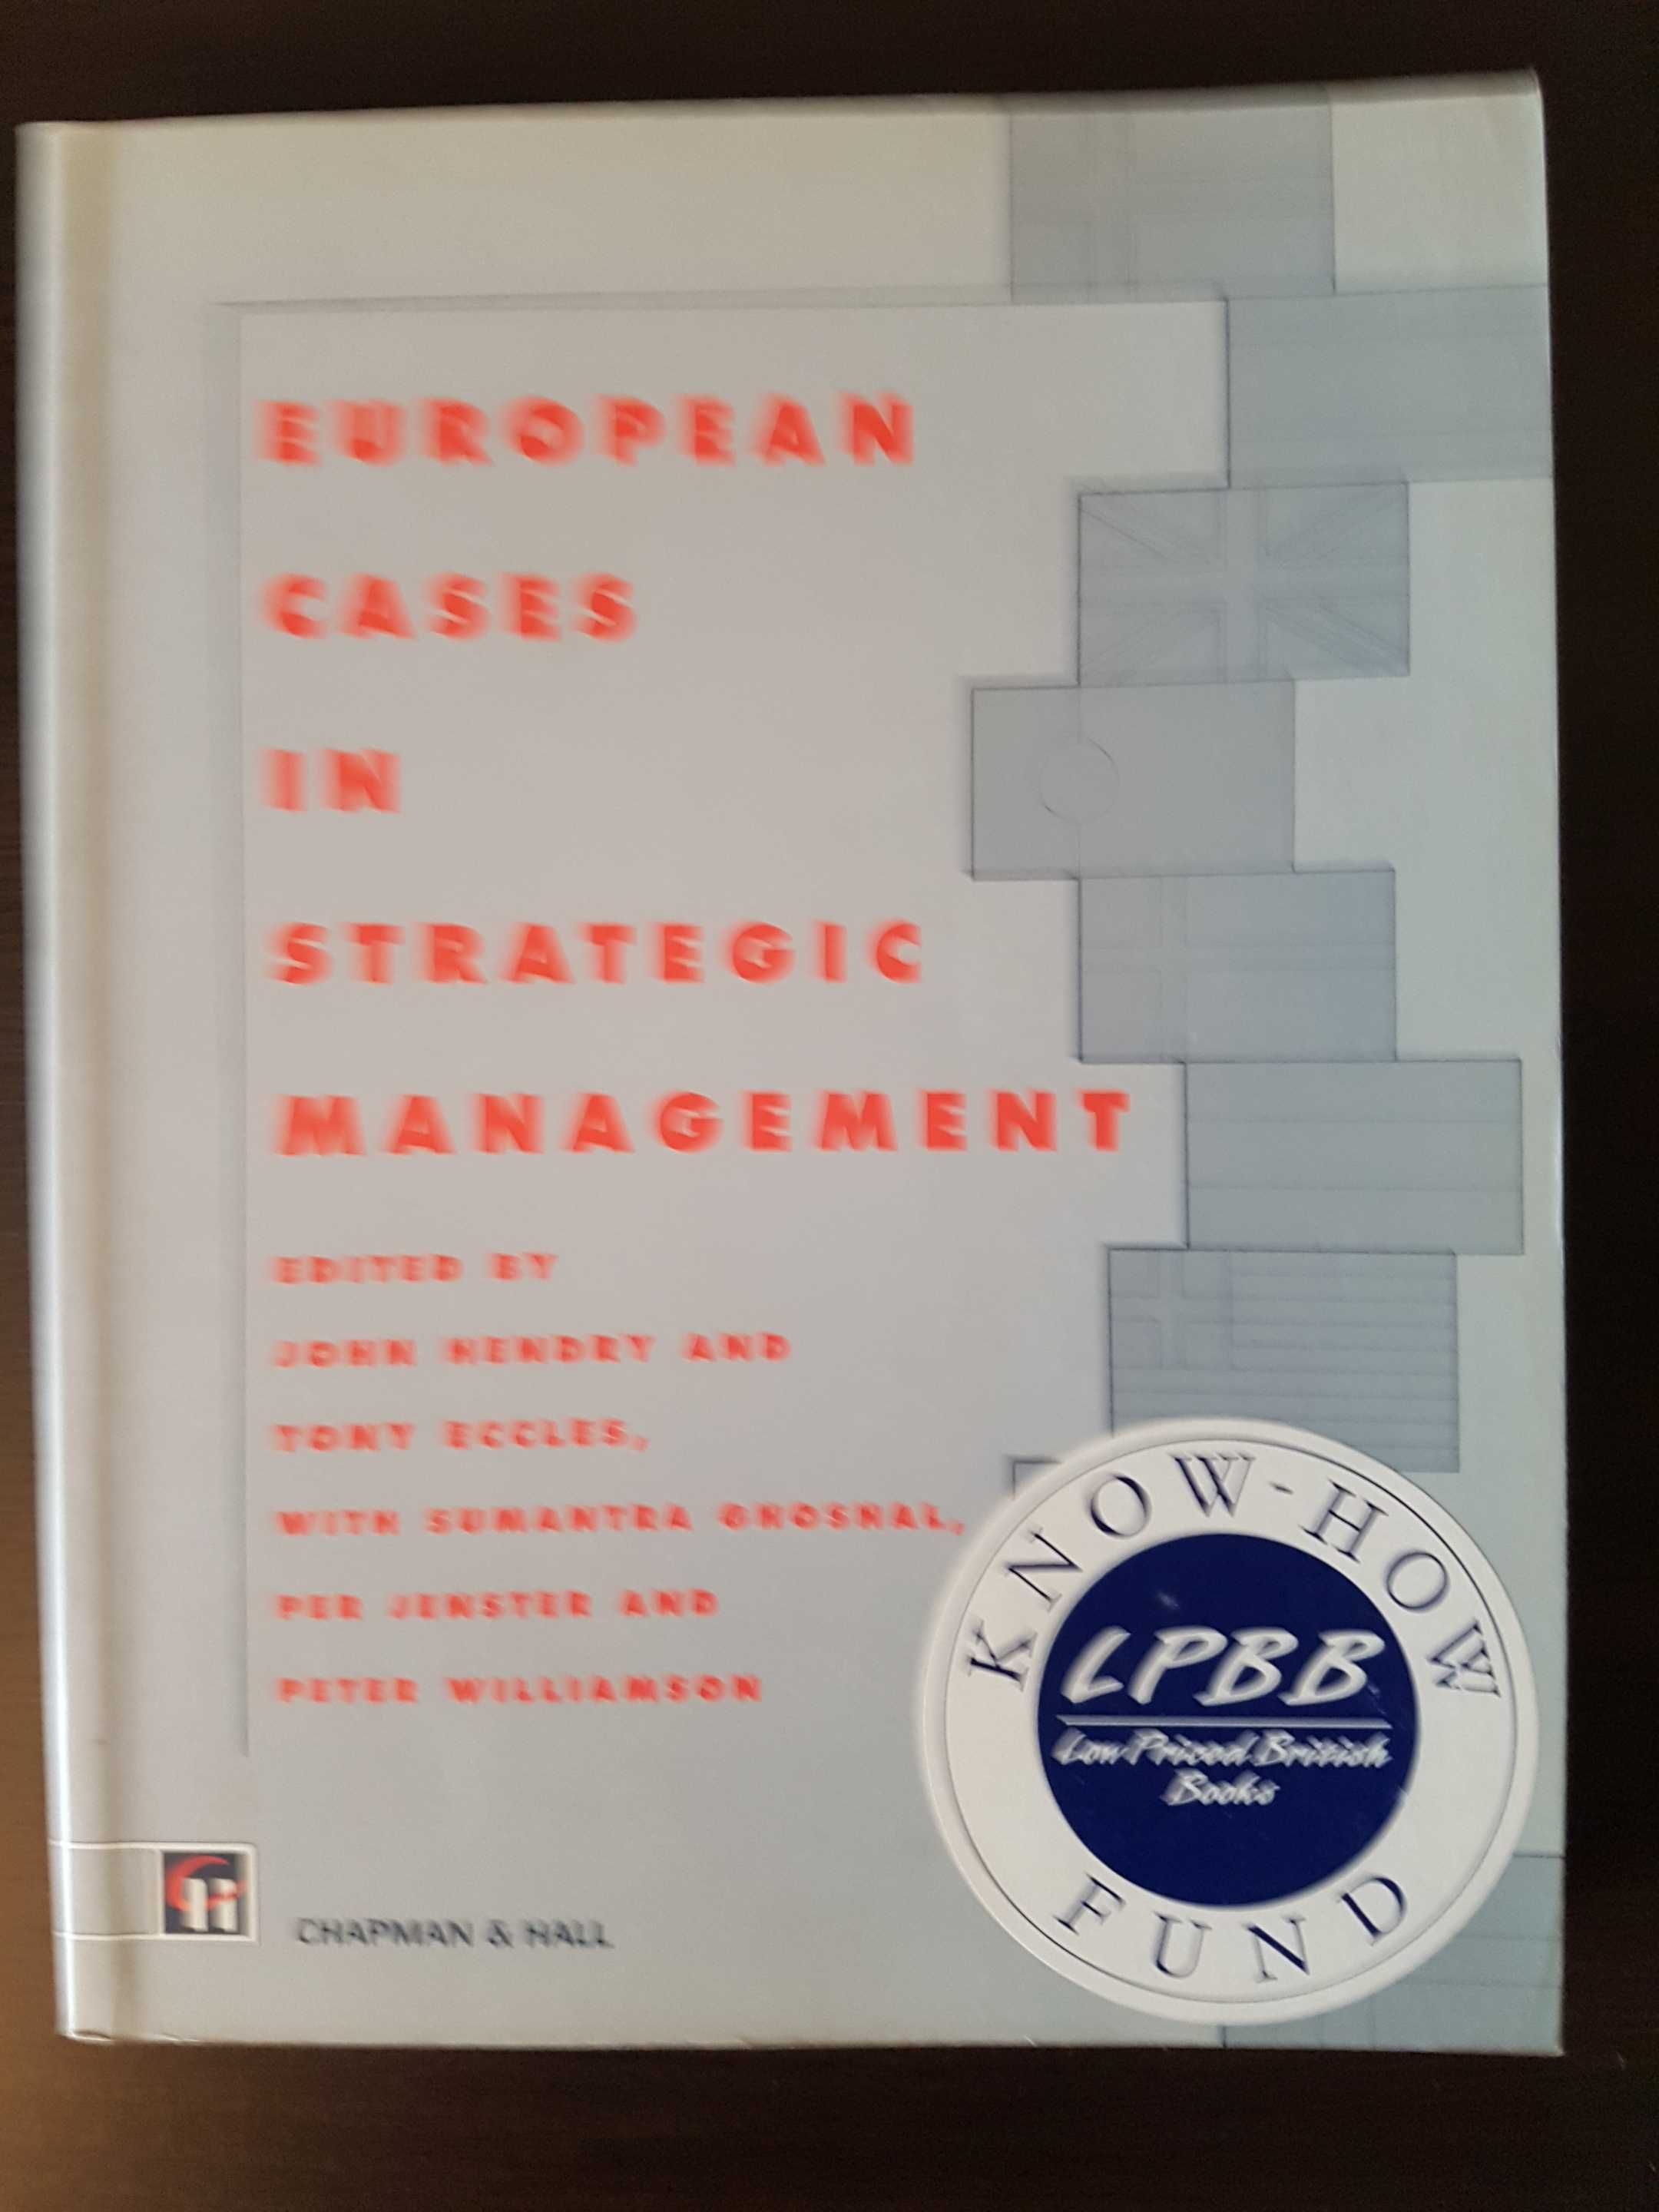 European cases in strategic management - John Hendry, Tony Eccles